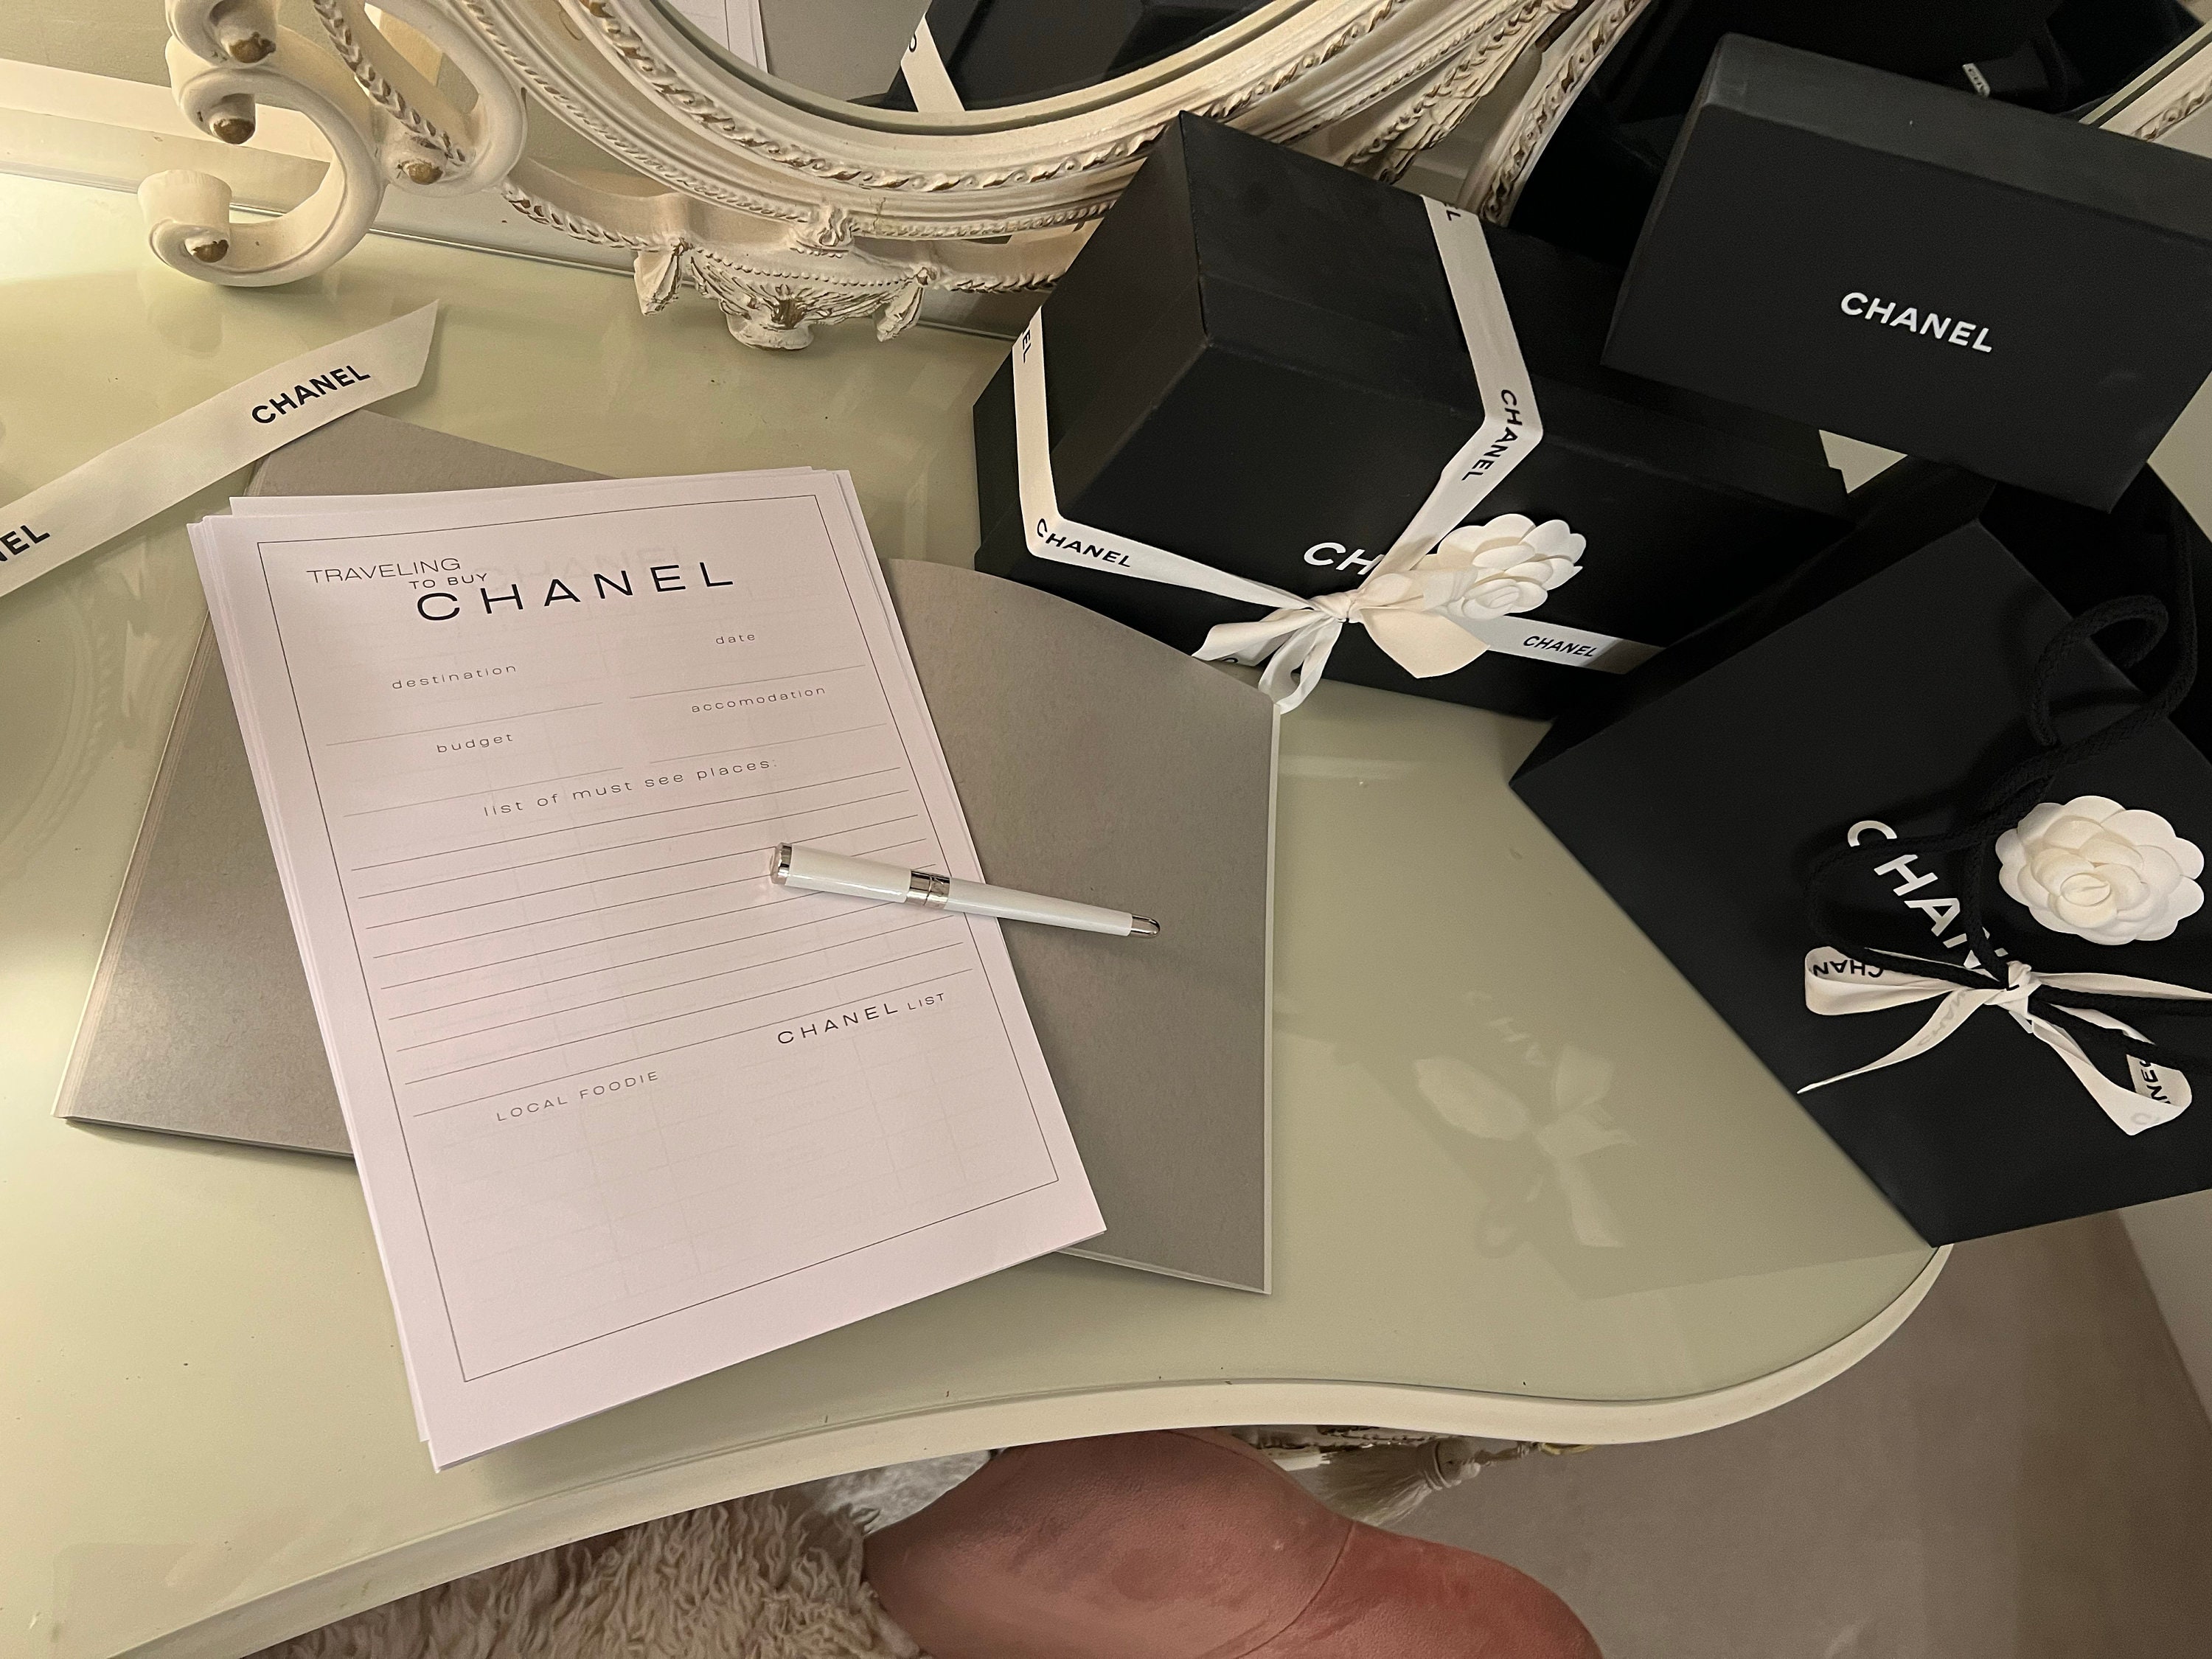 NEW Chanel Agenda & Set Up: Budget Planner 